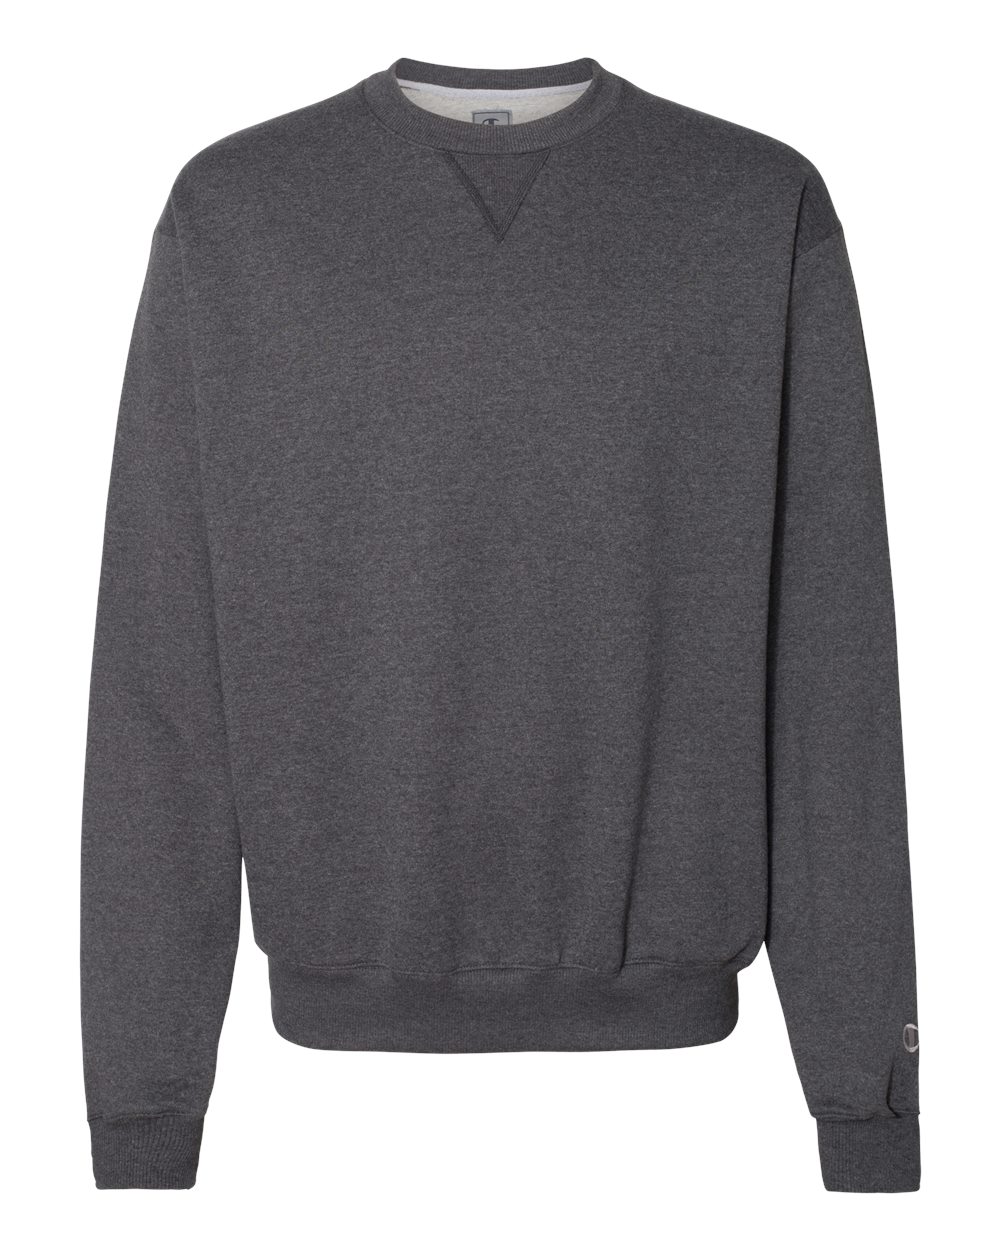 heather gray champion sweatshirt